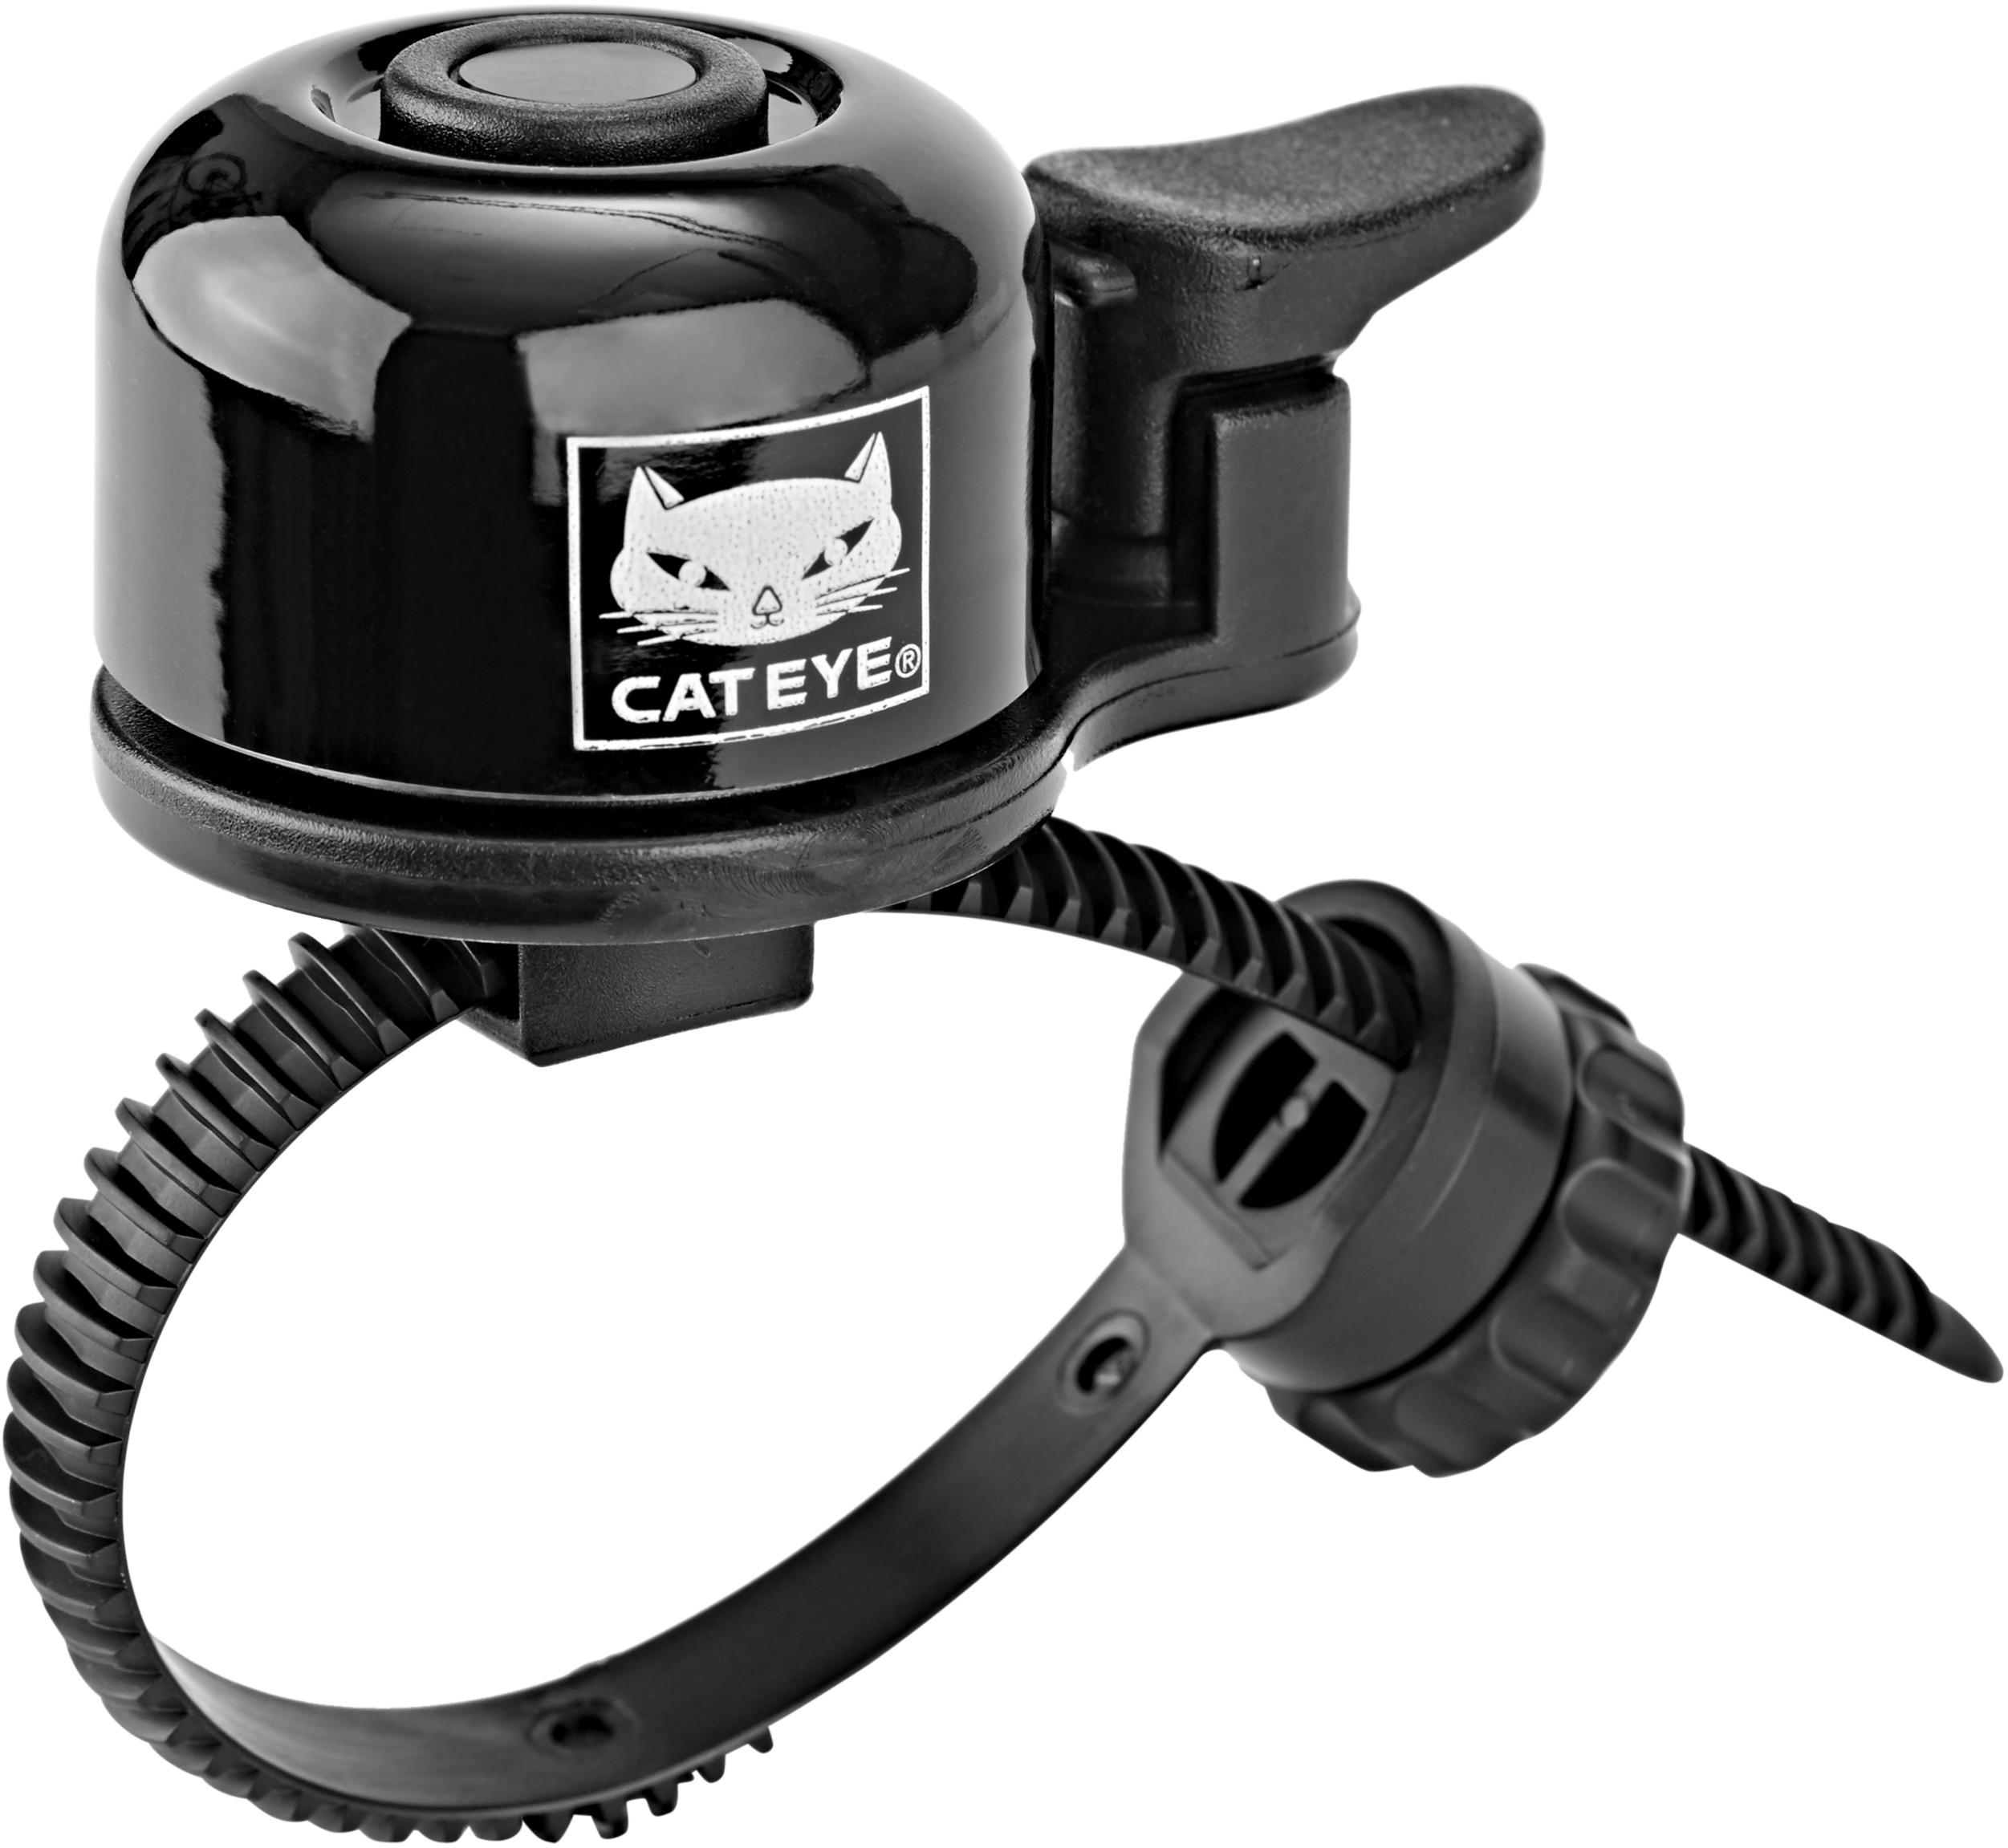 CATEYE Oh-1400 Bell